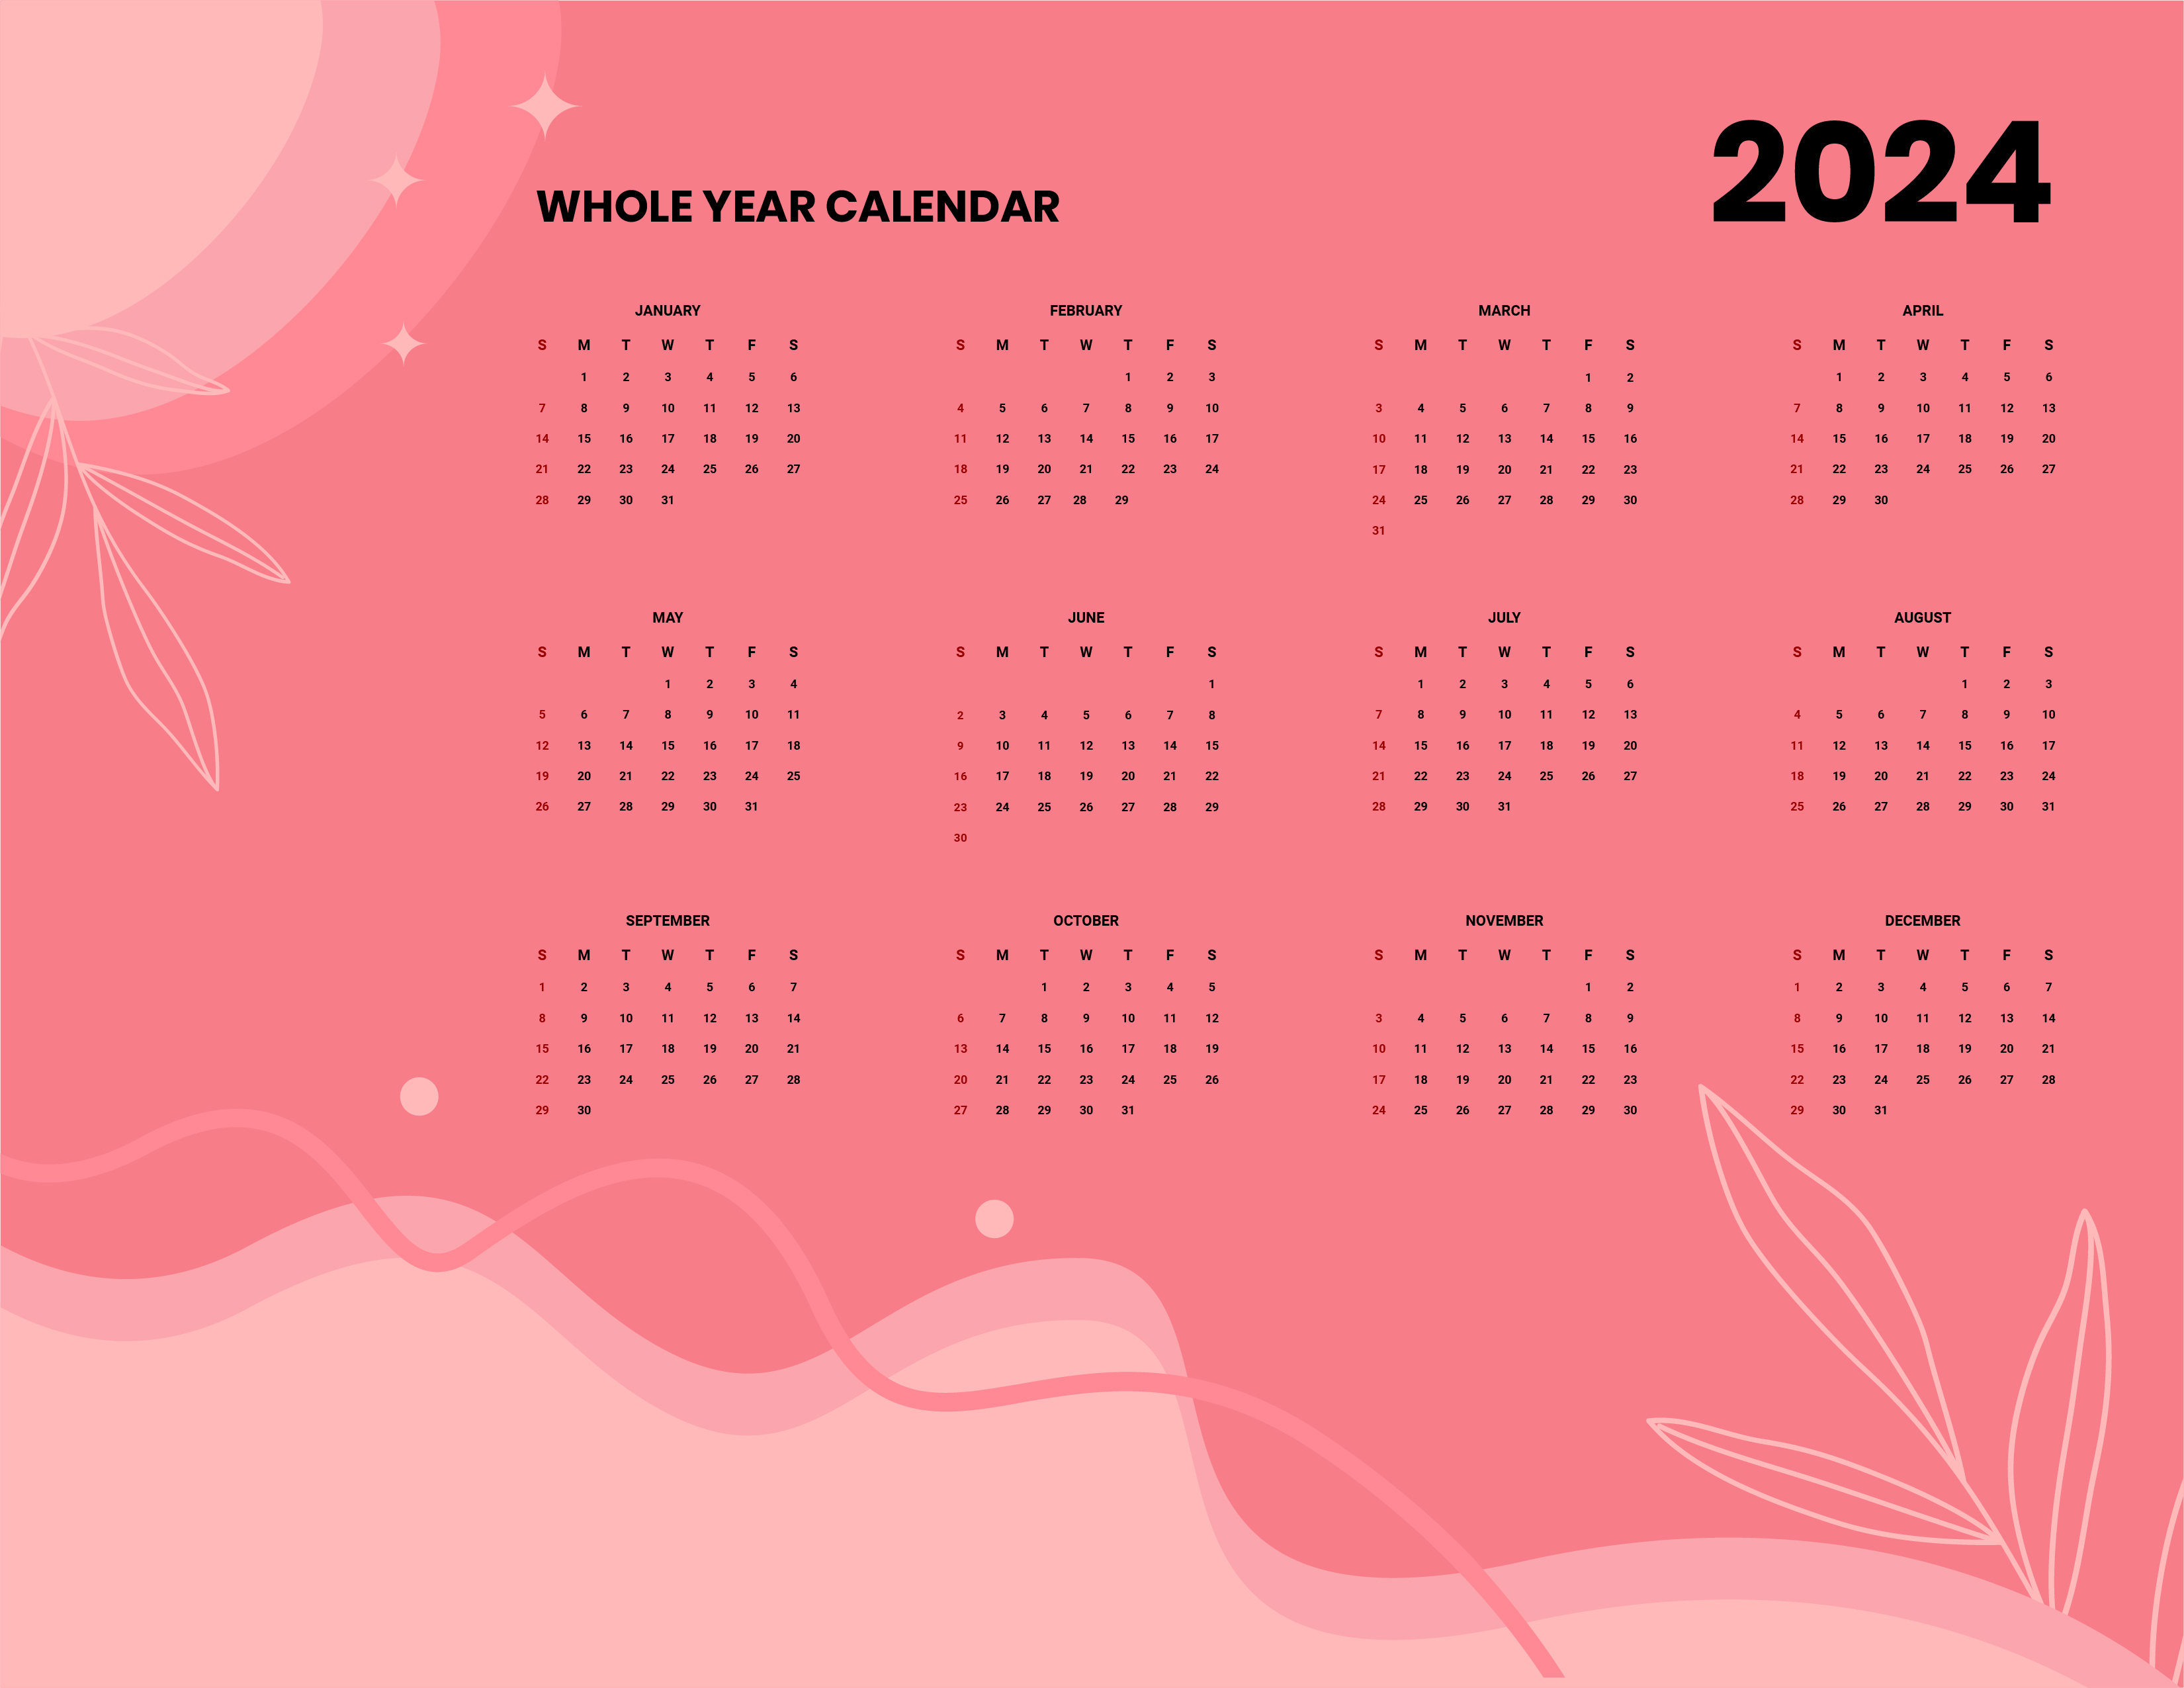 Year 2024 Calendar Download In Word Google Docs Illustrator EPS SVG JPG Template